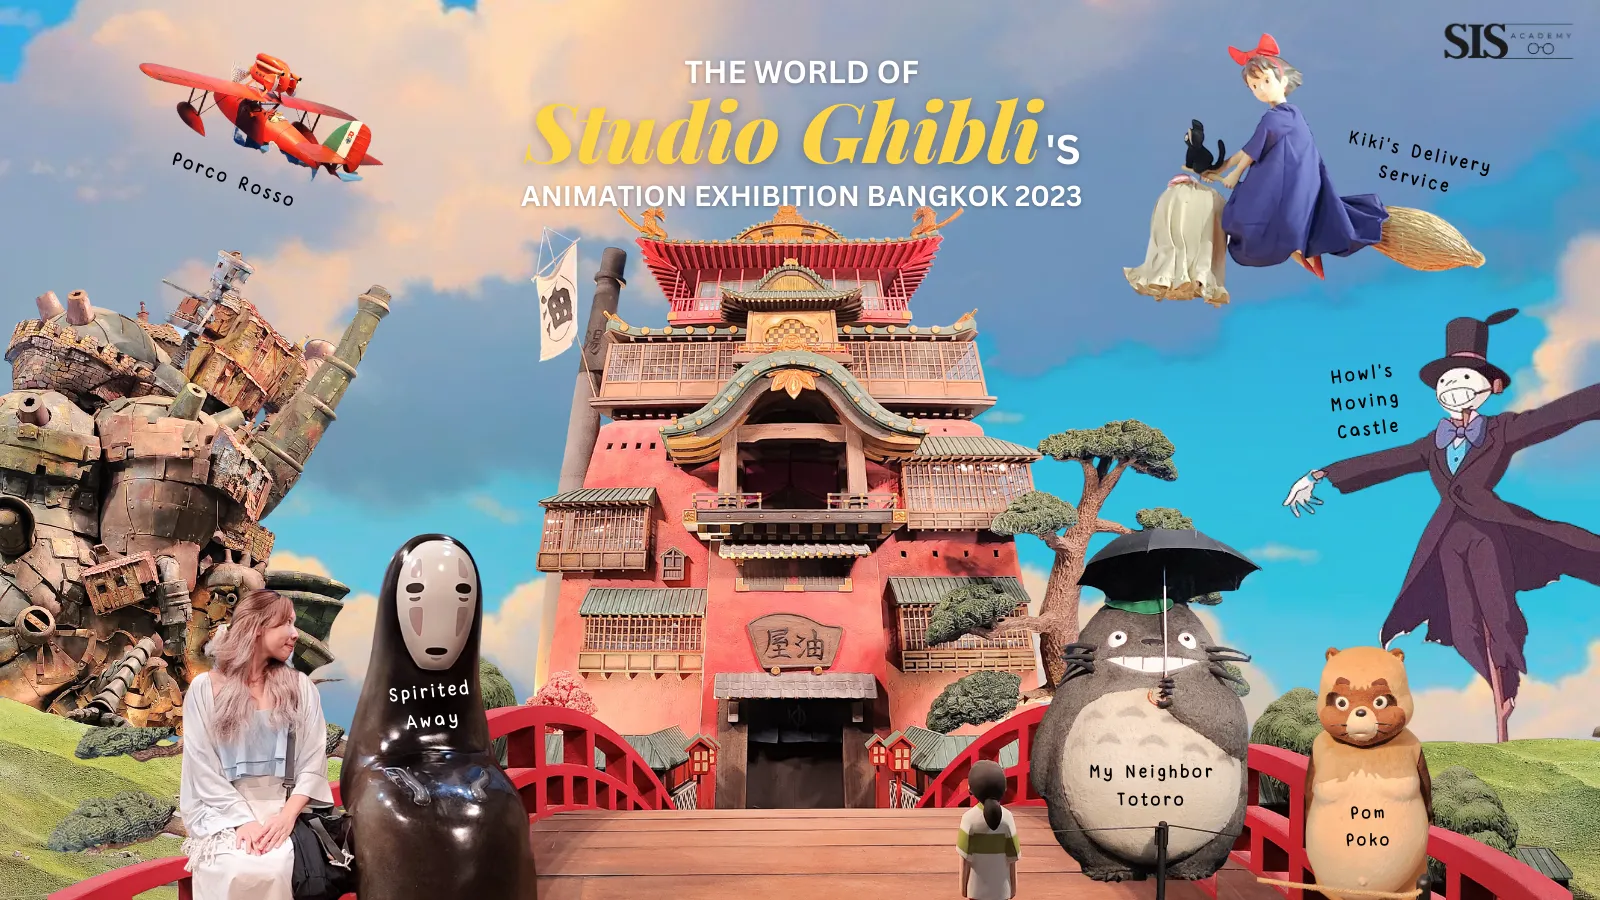 The World of Studio Ghibli's Animation Exhibition Bangkok 2023